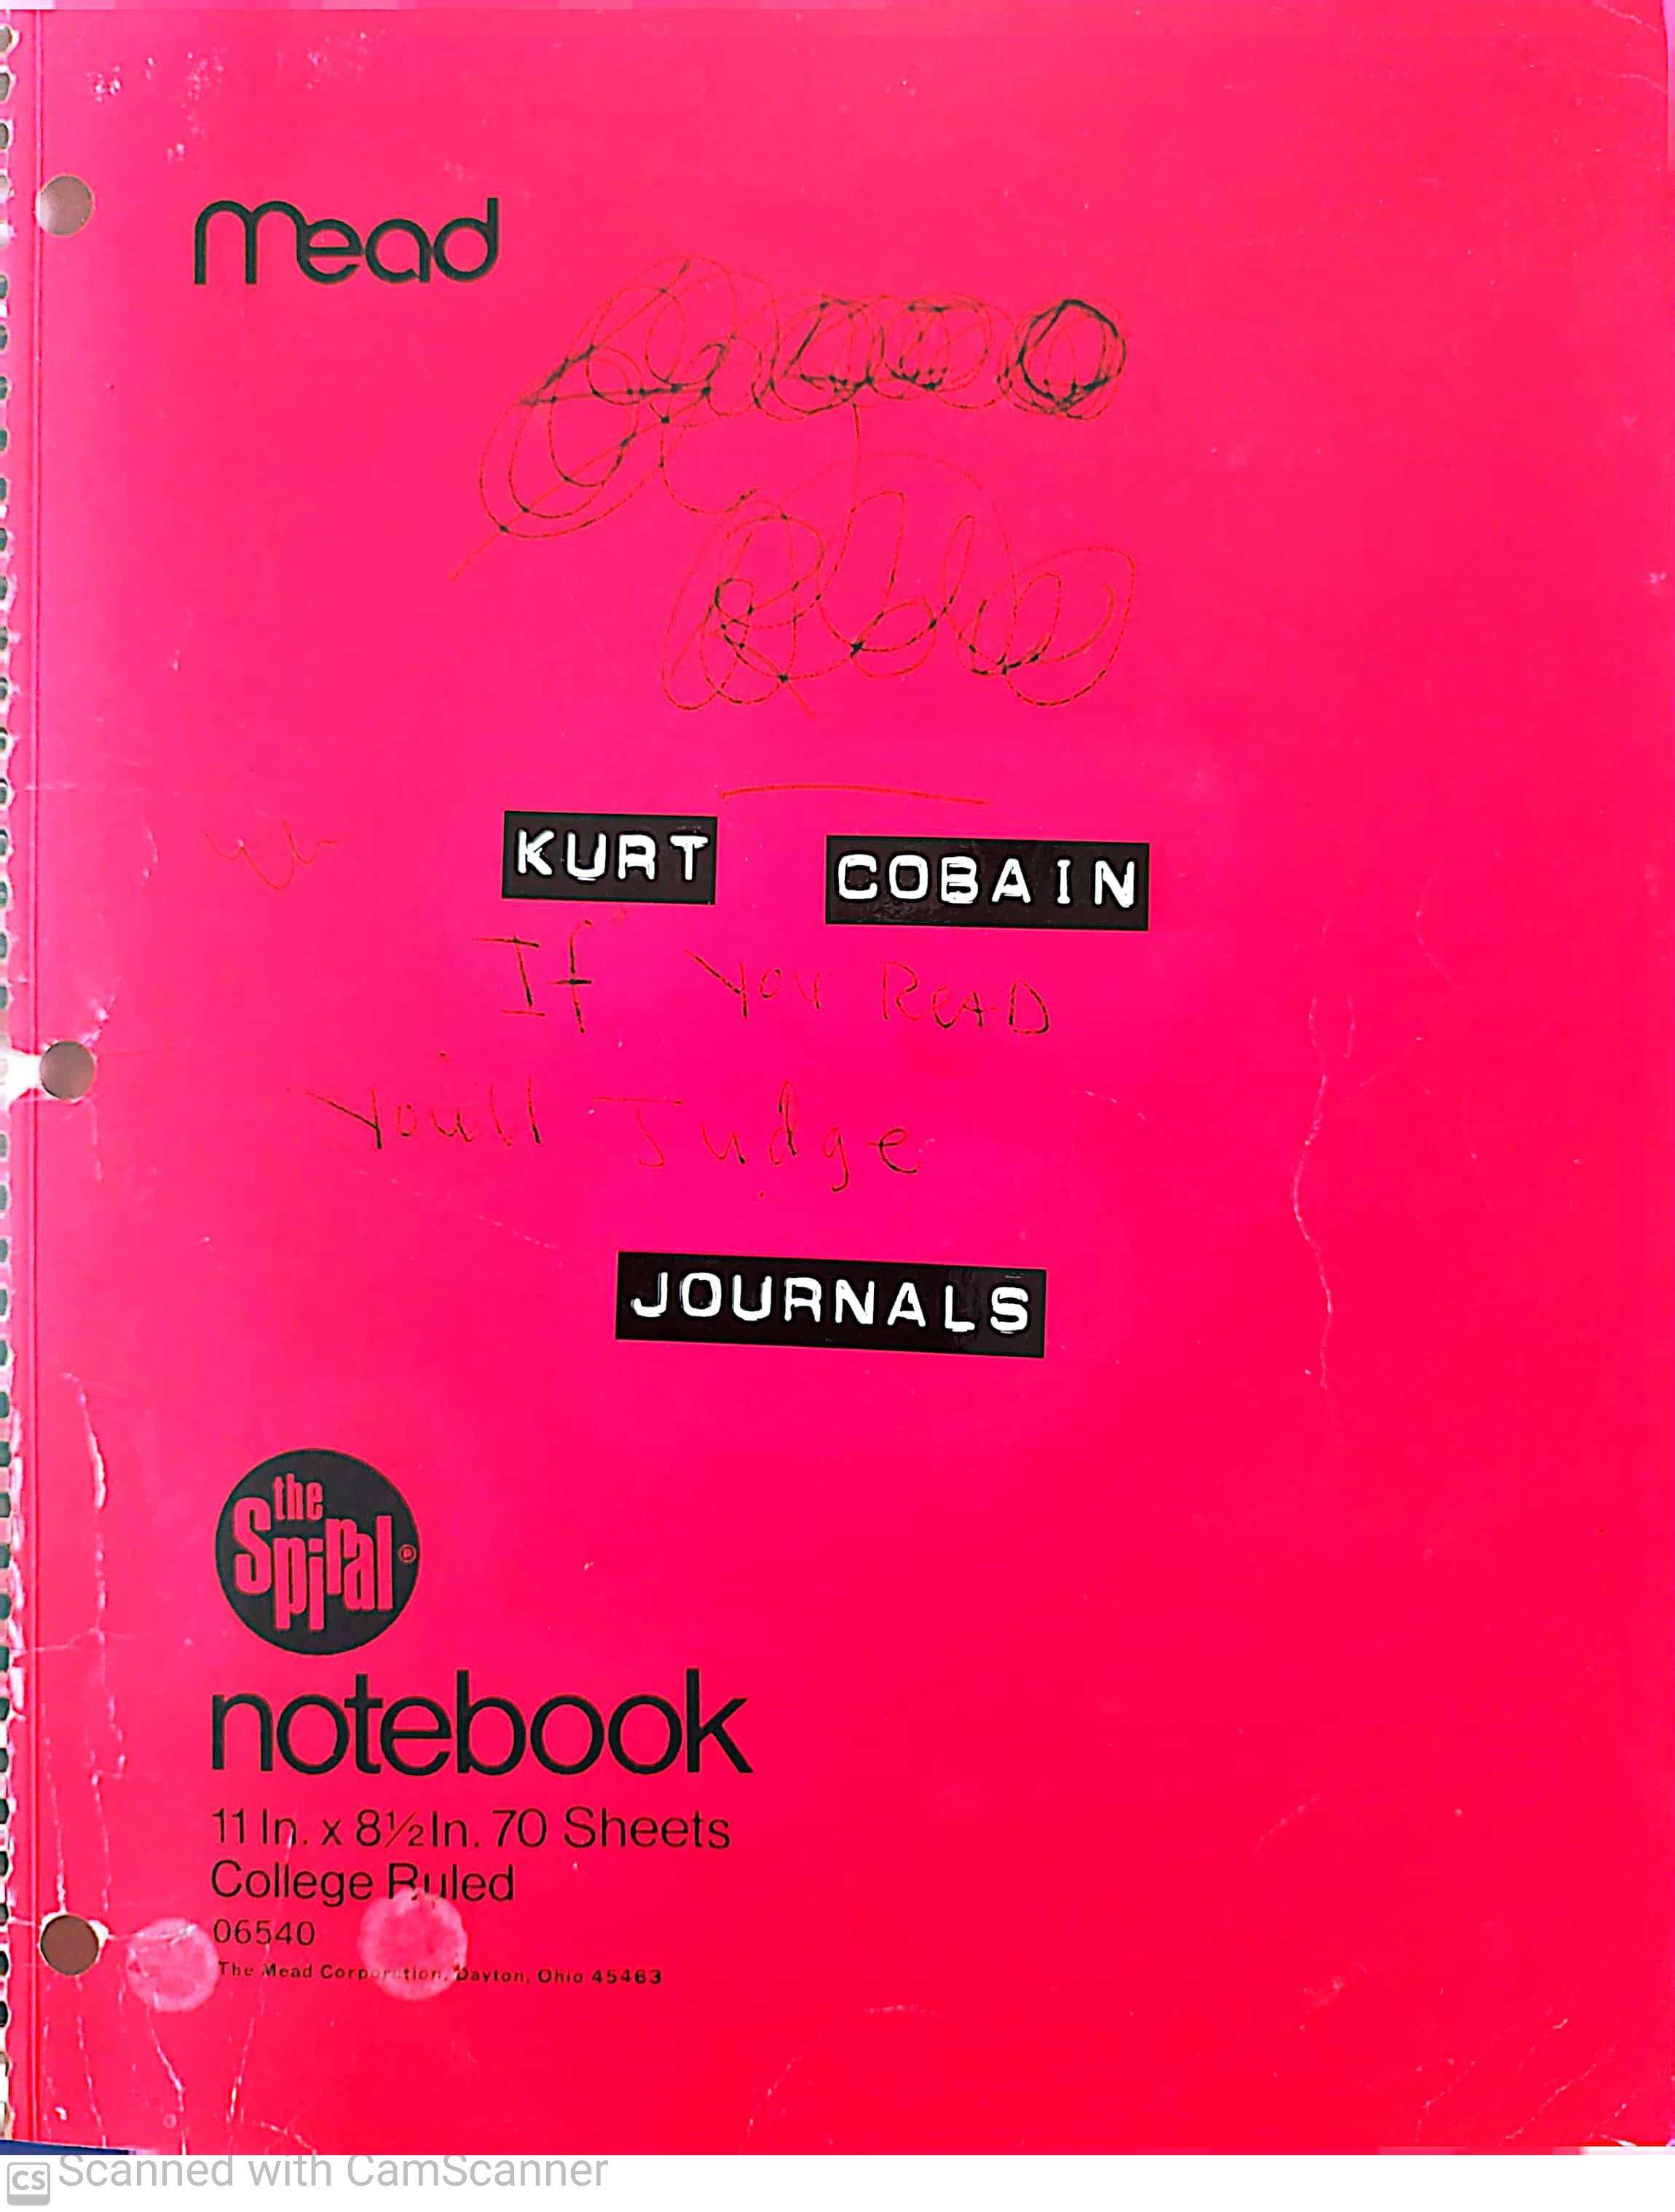 Kurt Kobain Journal - carte